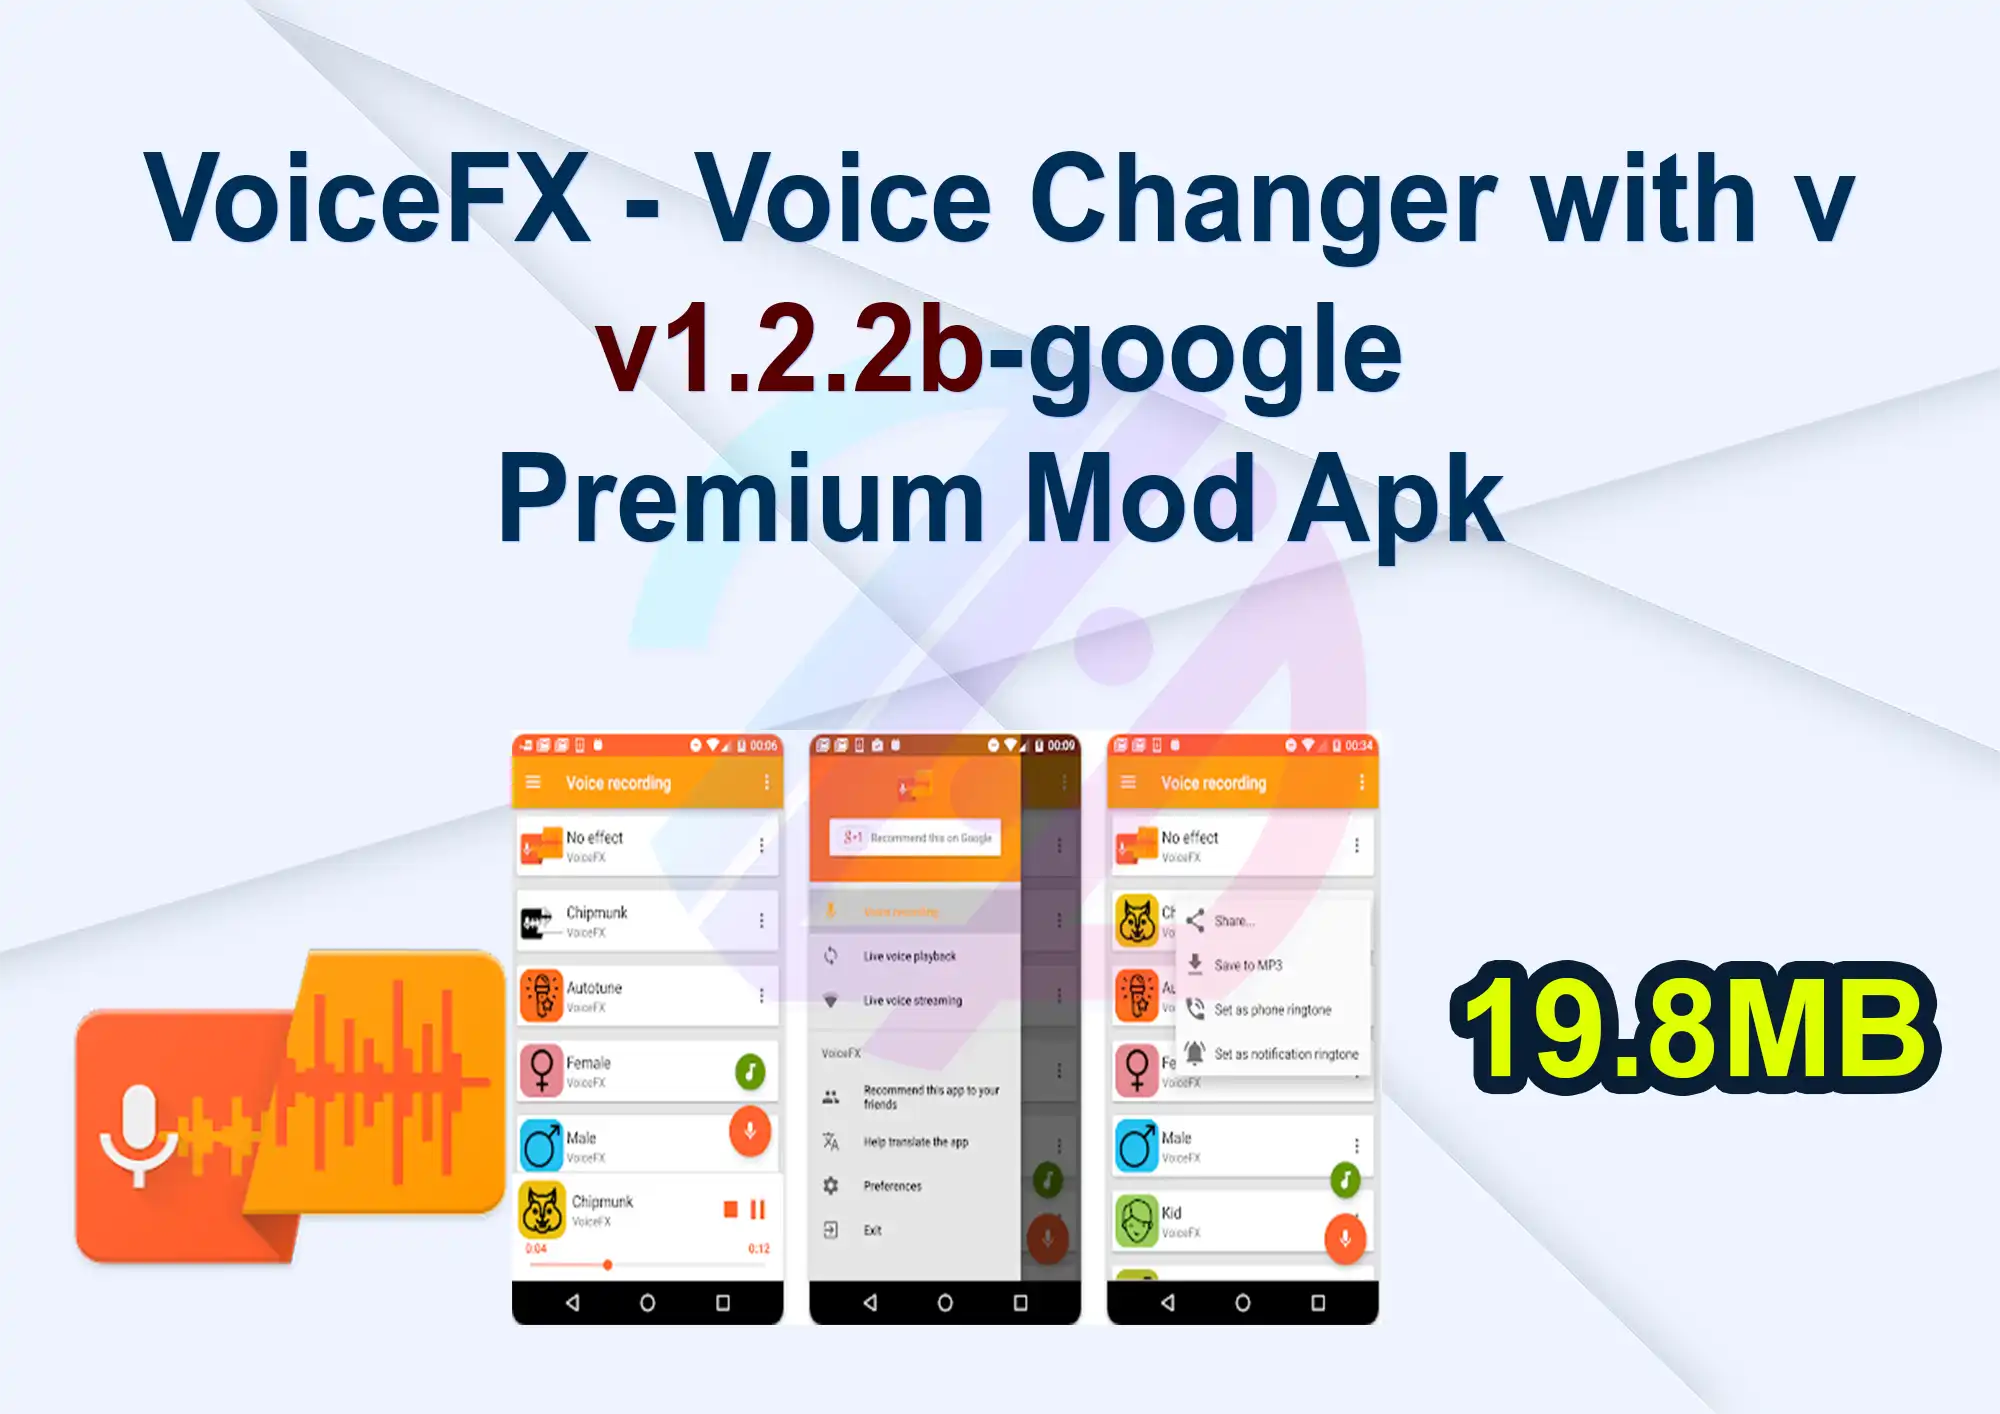 VoiceFX - Voice Changer with v v1.2.2b-google Premium Mod Apk